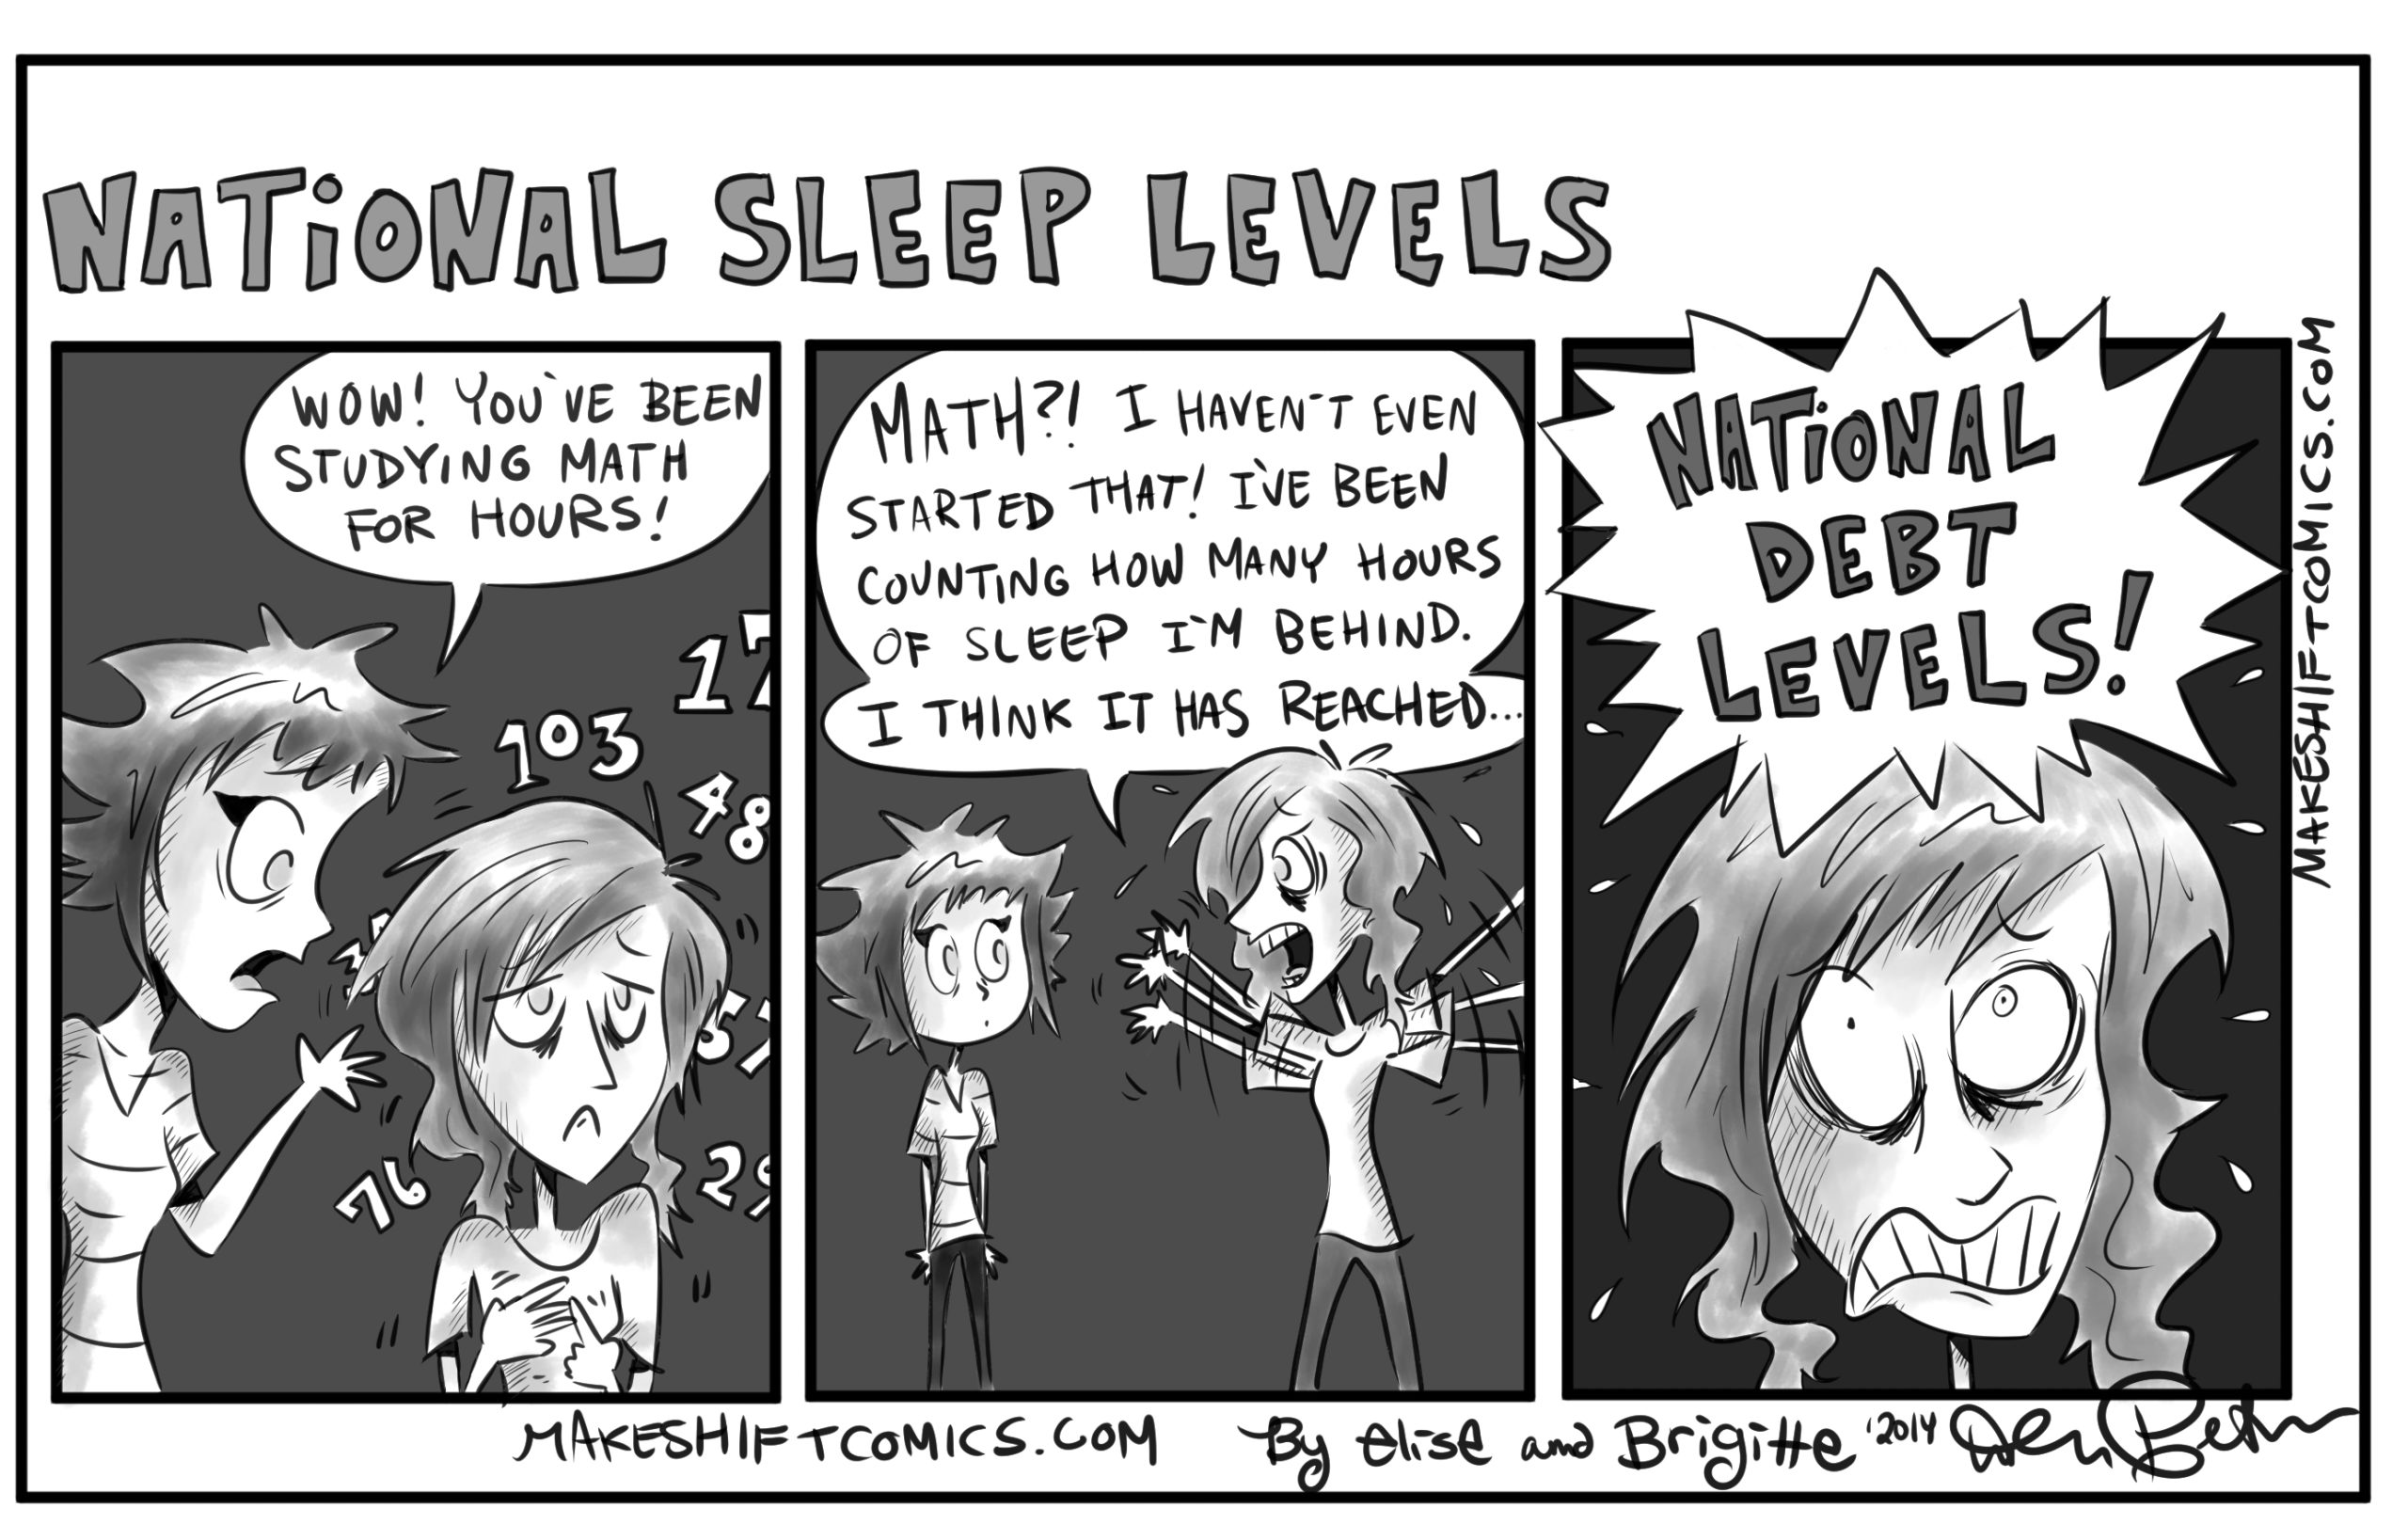 National Sleep Levels